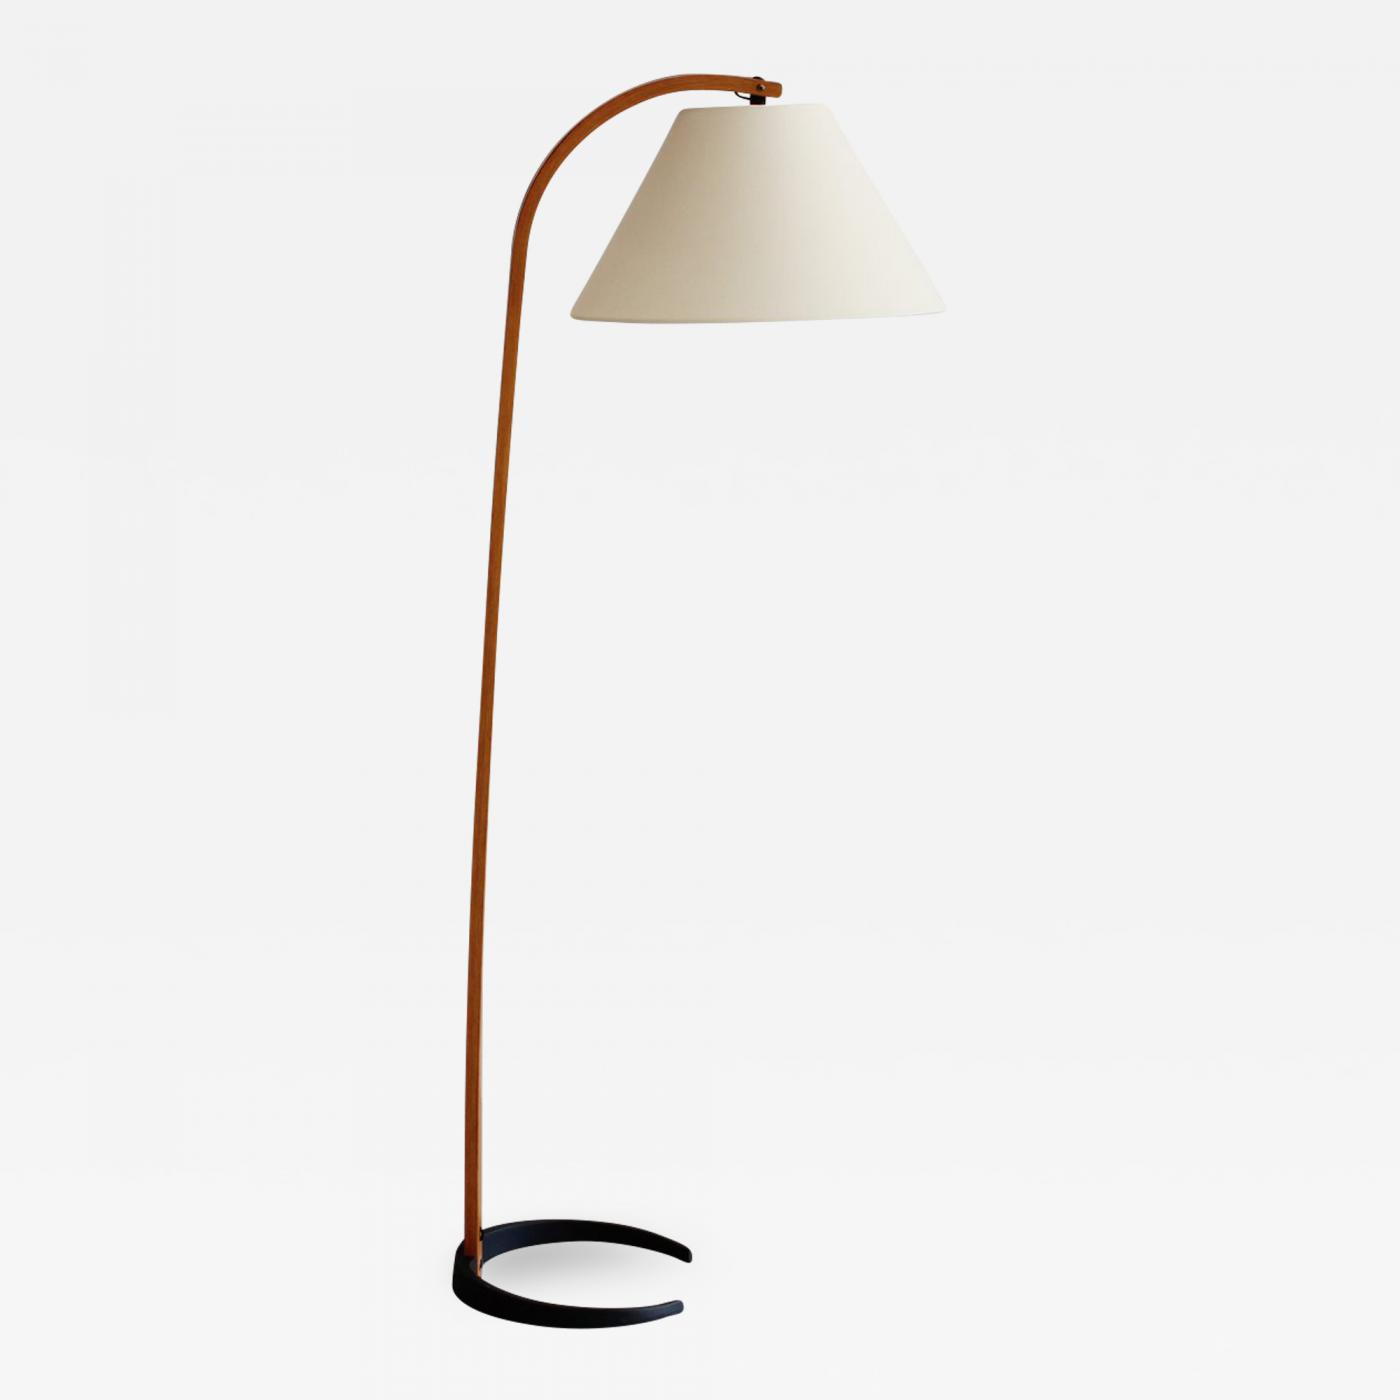 Caprani Light As Floor Lamp Mads Caprani with regard to size 1400 X 1400